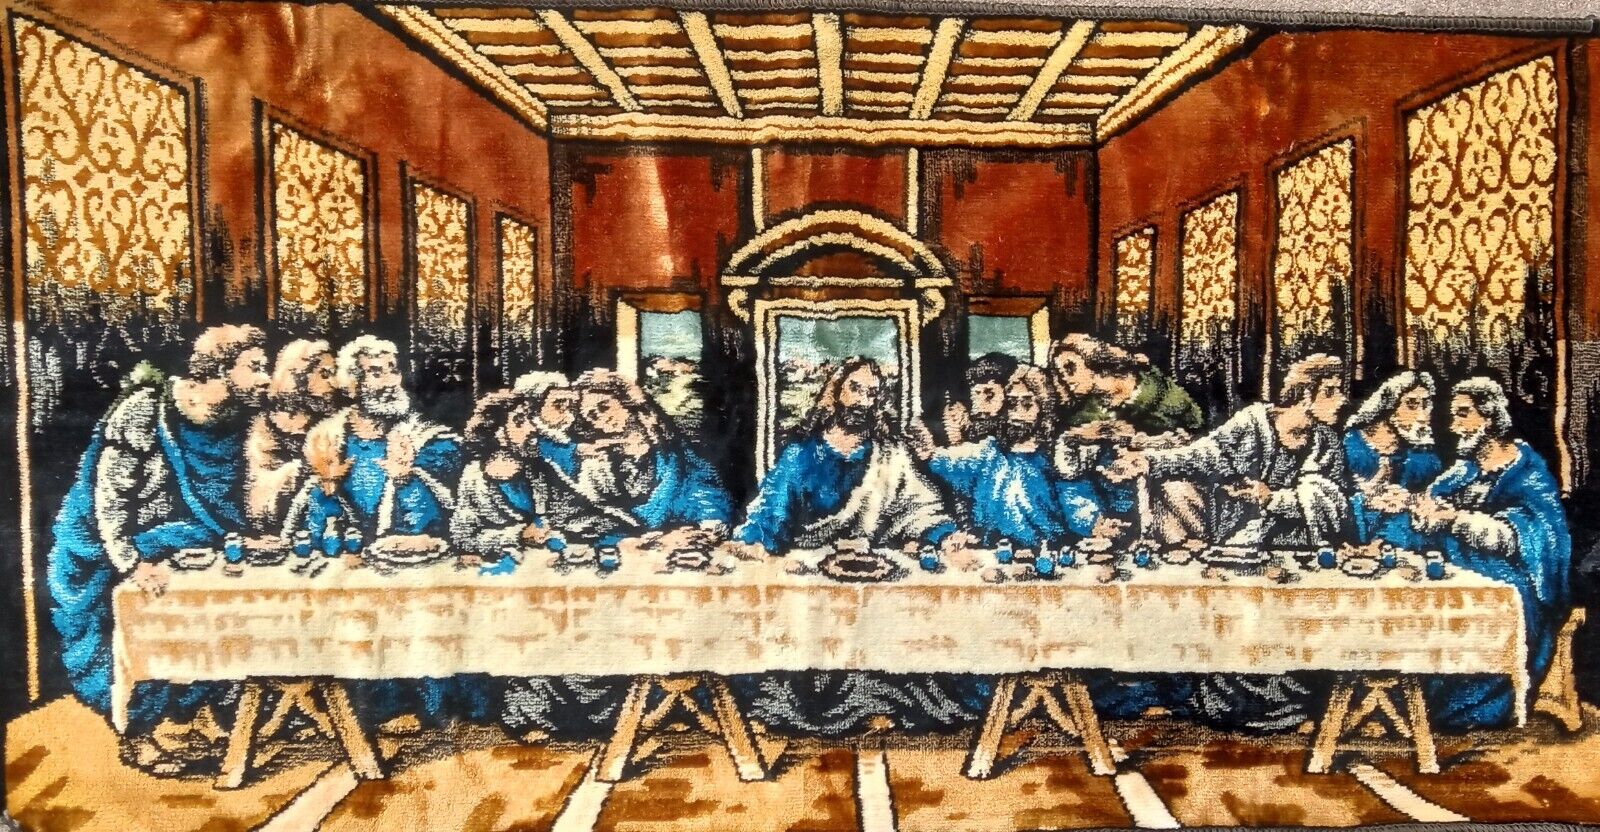 The Da Vinci Last Supper Jesus Dining Woven Tapestry Wall Hanging Art Decor VTG